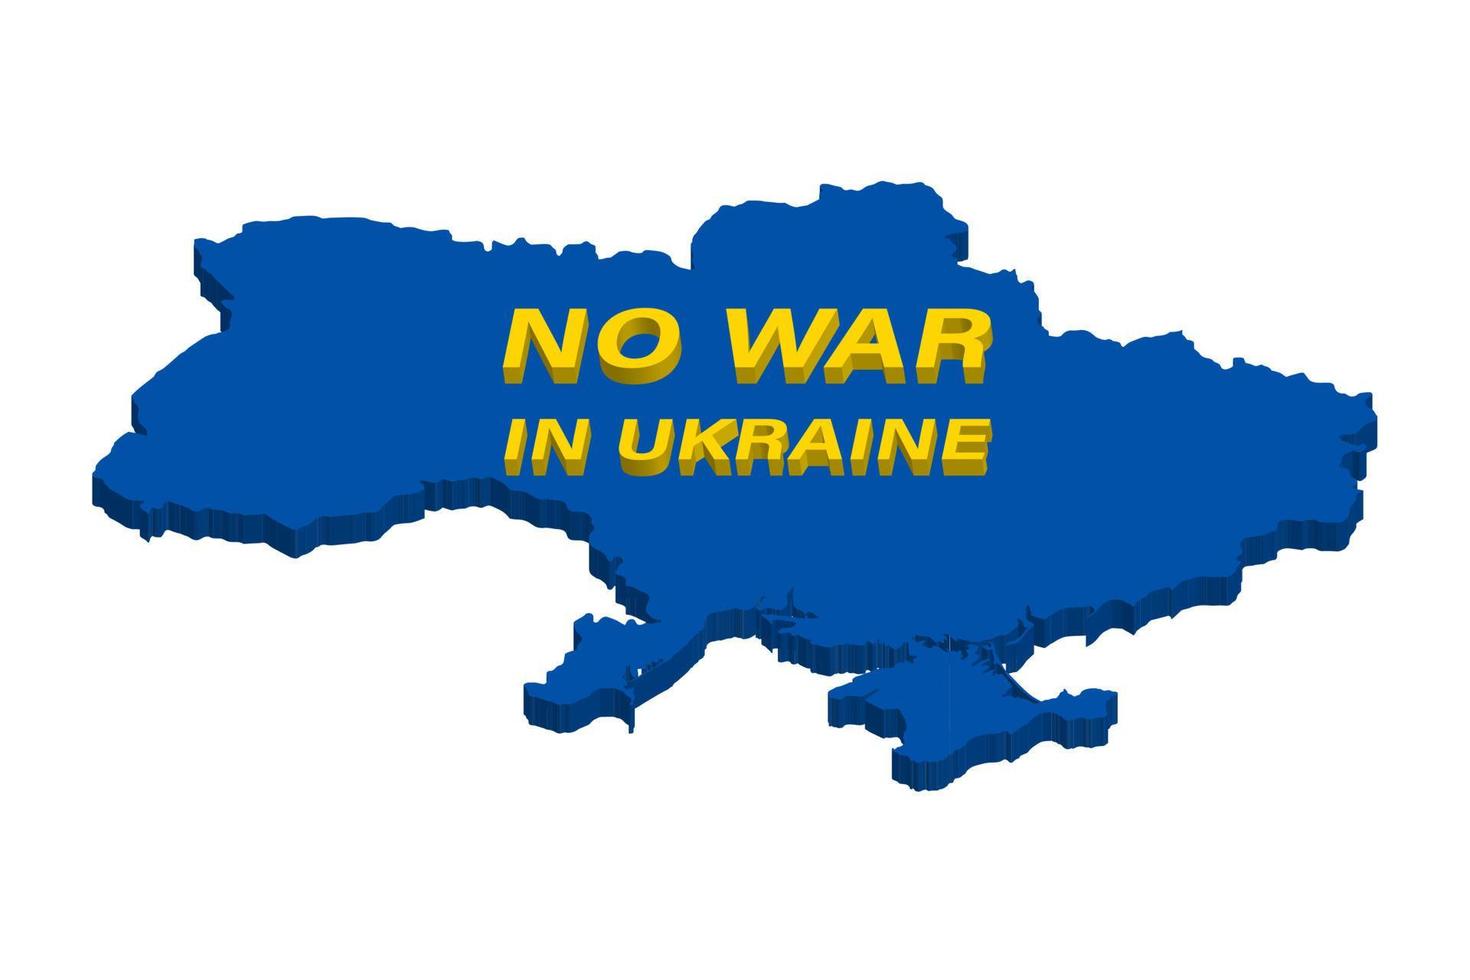 pas de guerre en ukraine slogan illustration russie attaque ukraine vecteur